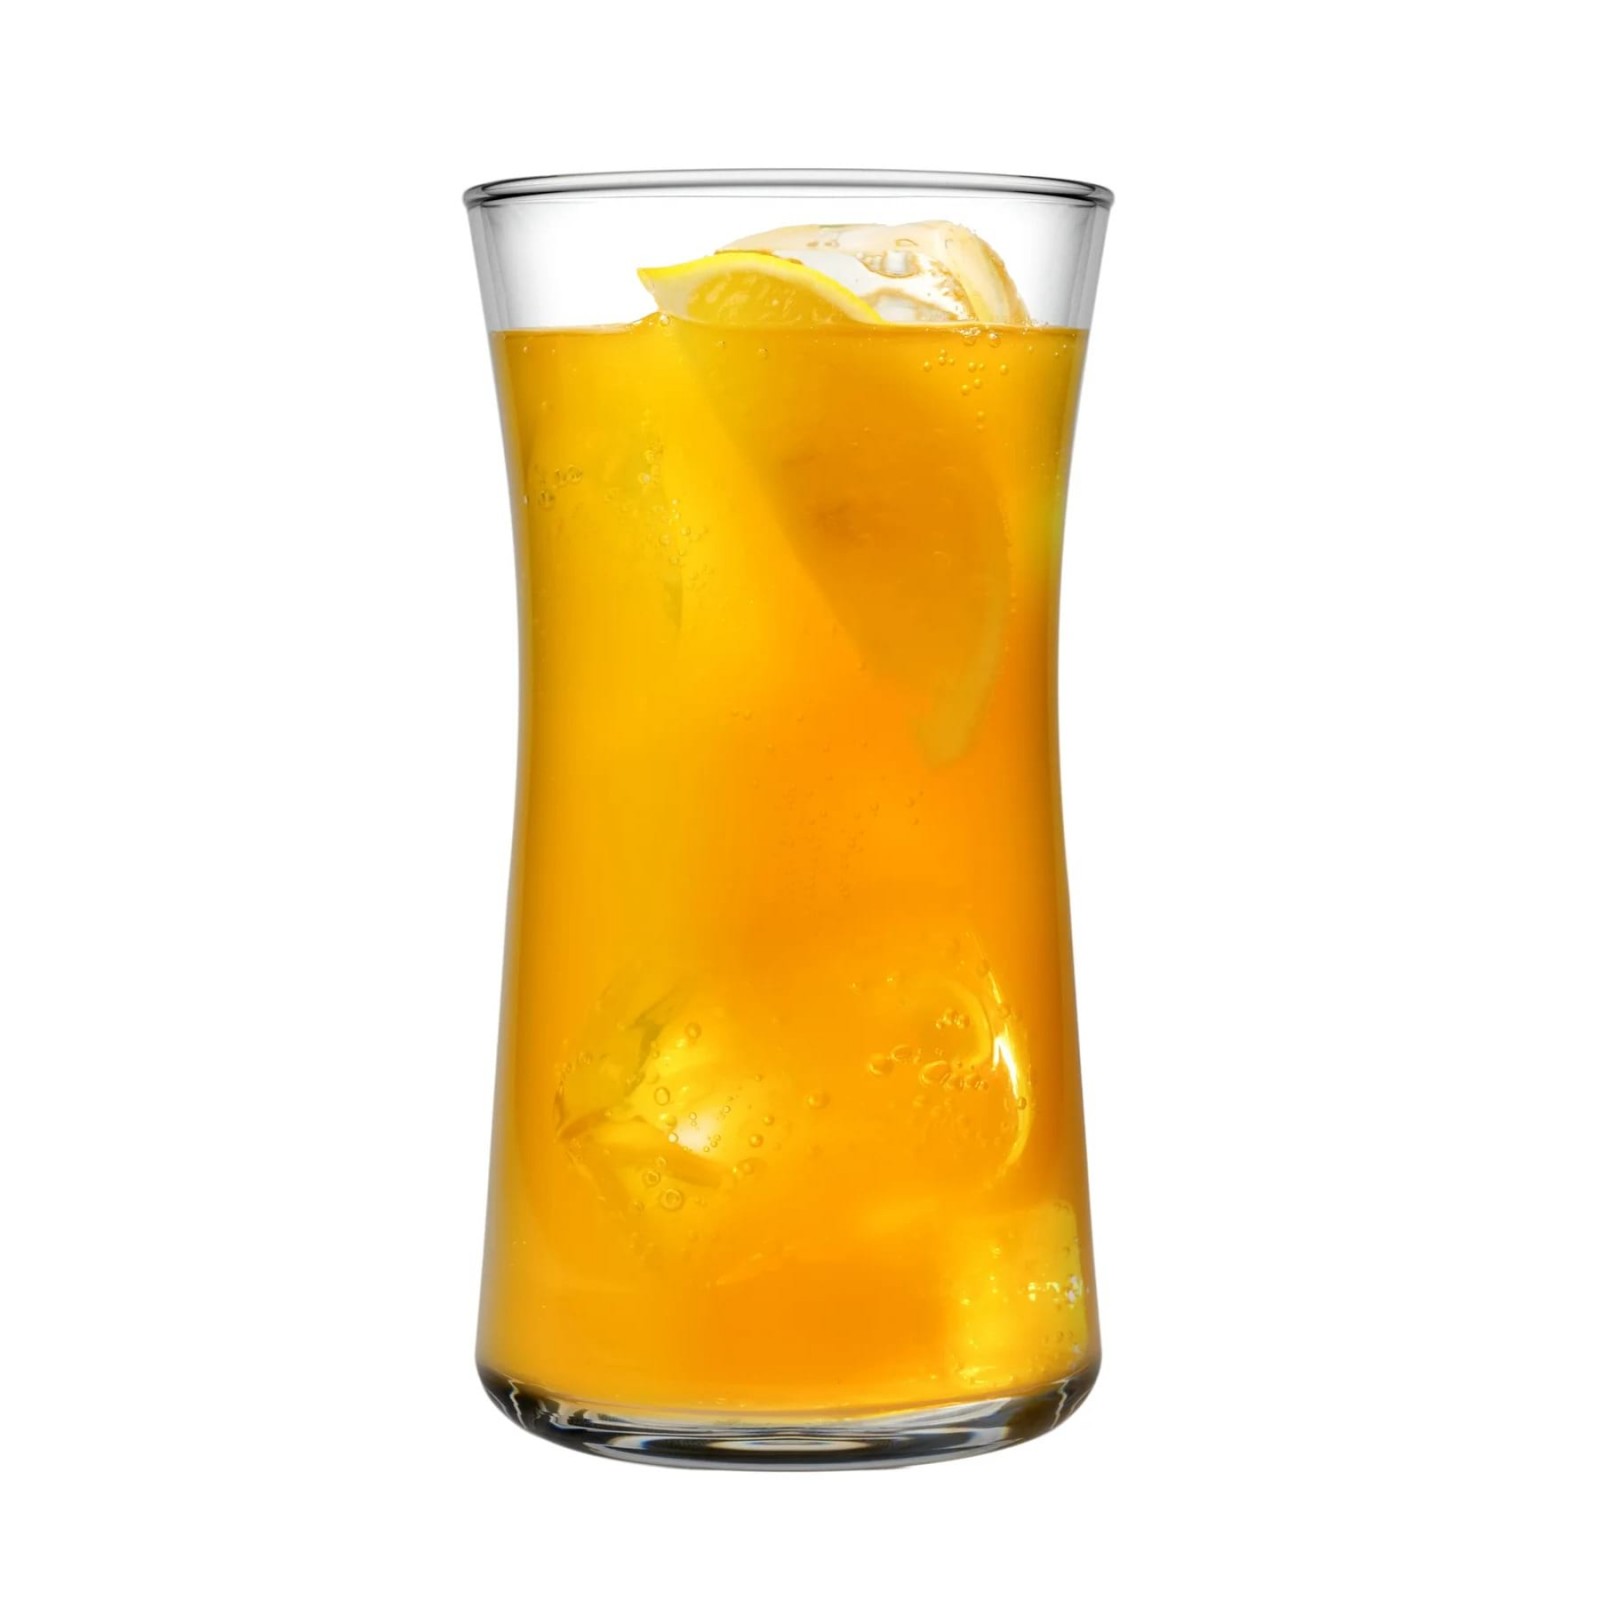 Heybeli 345ml Drinking Glass (Set of 6)